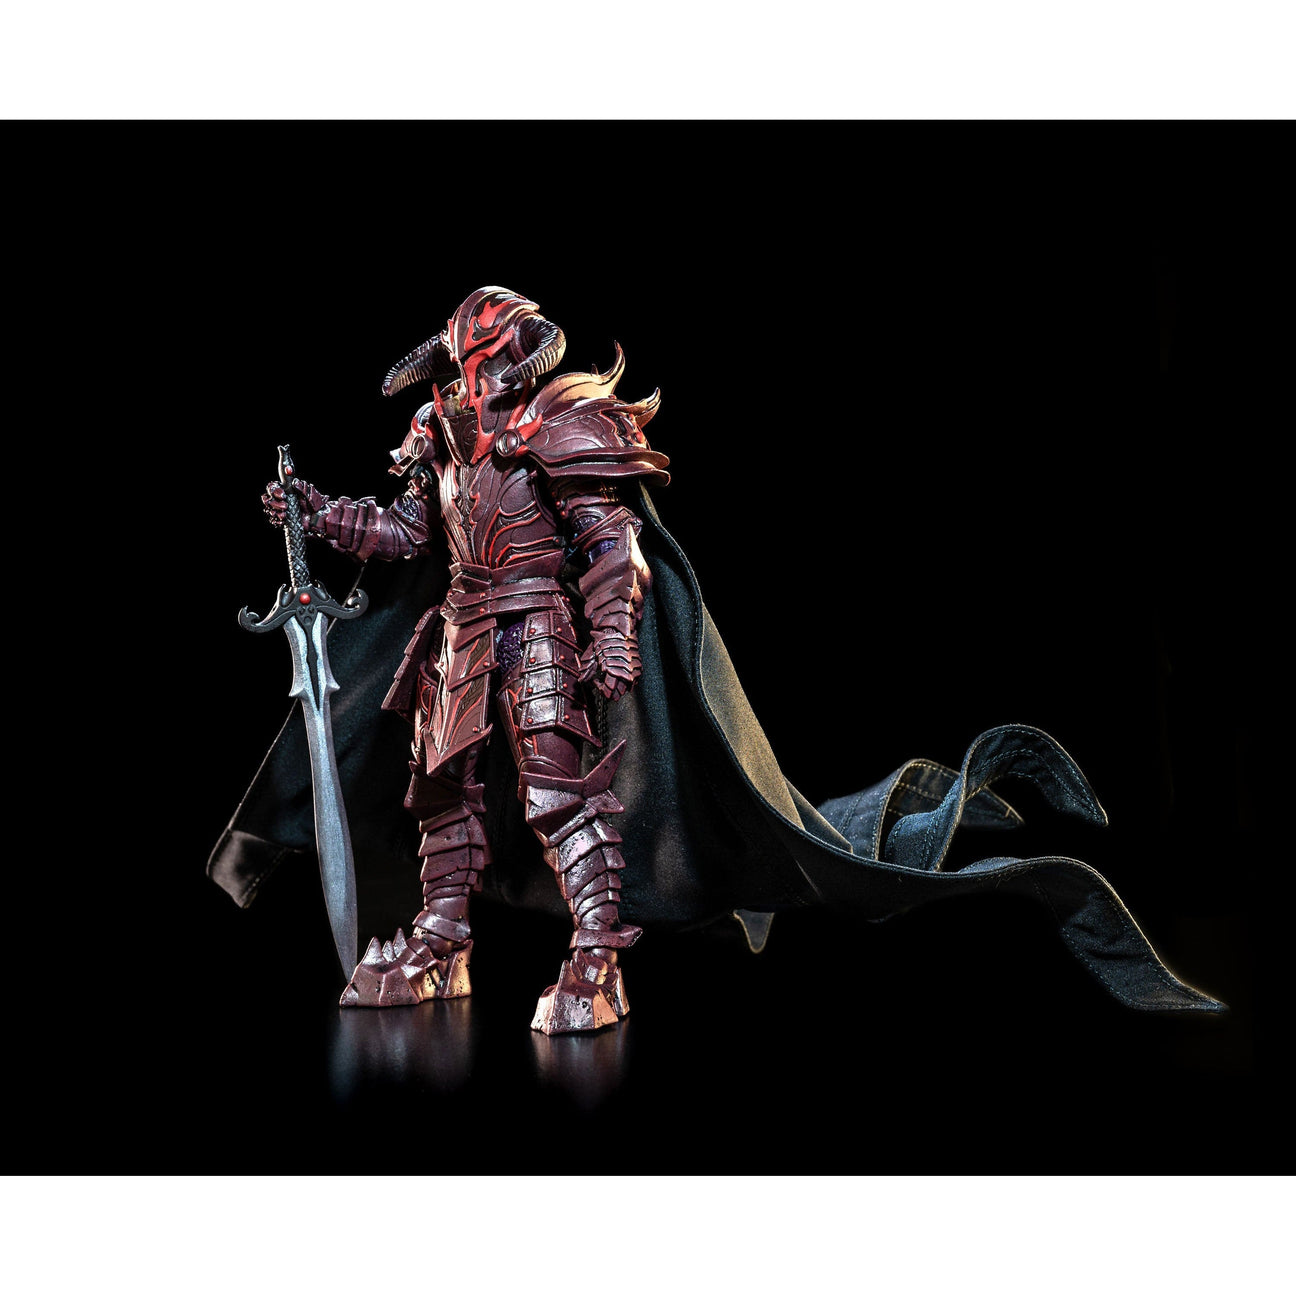 Mythic Legions: Vorgus Vermillius 2 (Legions Con Exclusive)-Actionfiguren-Four Horsemen Toy Design-Mighty Underground